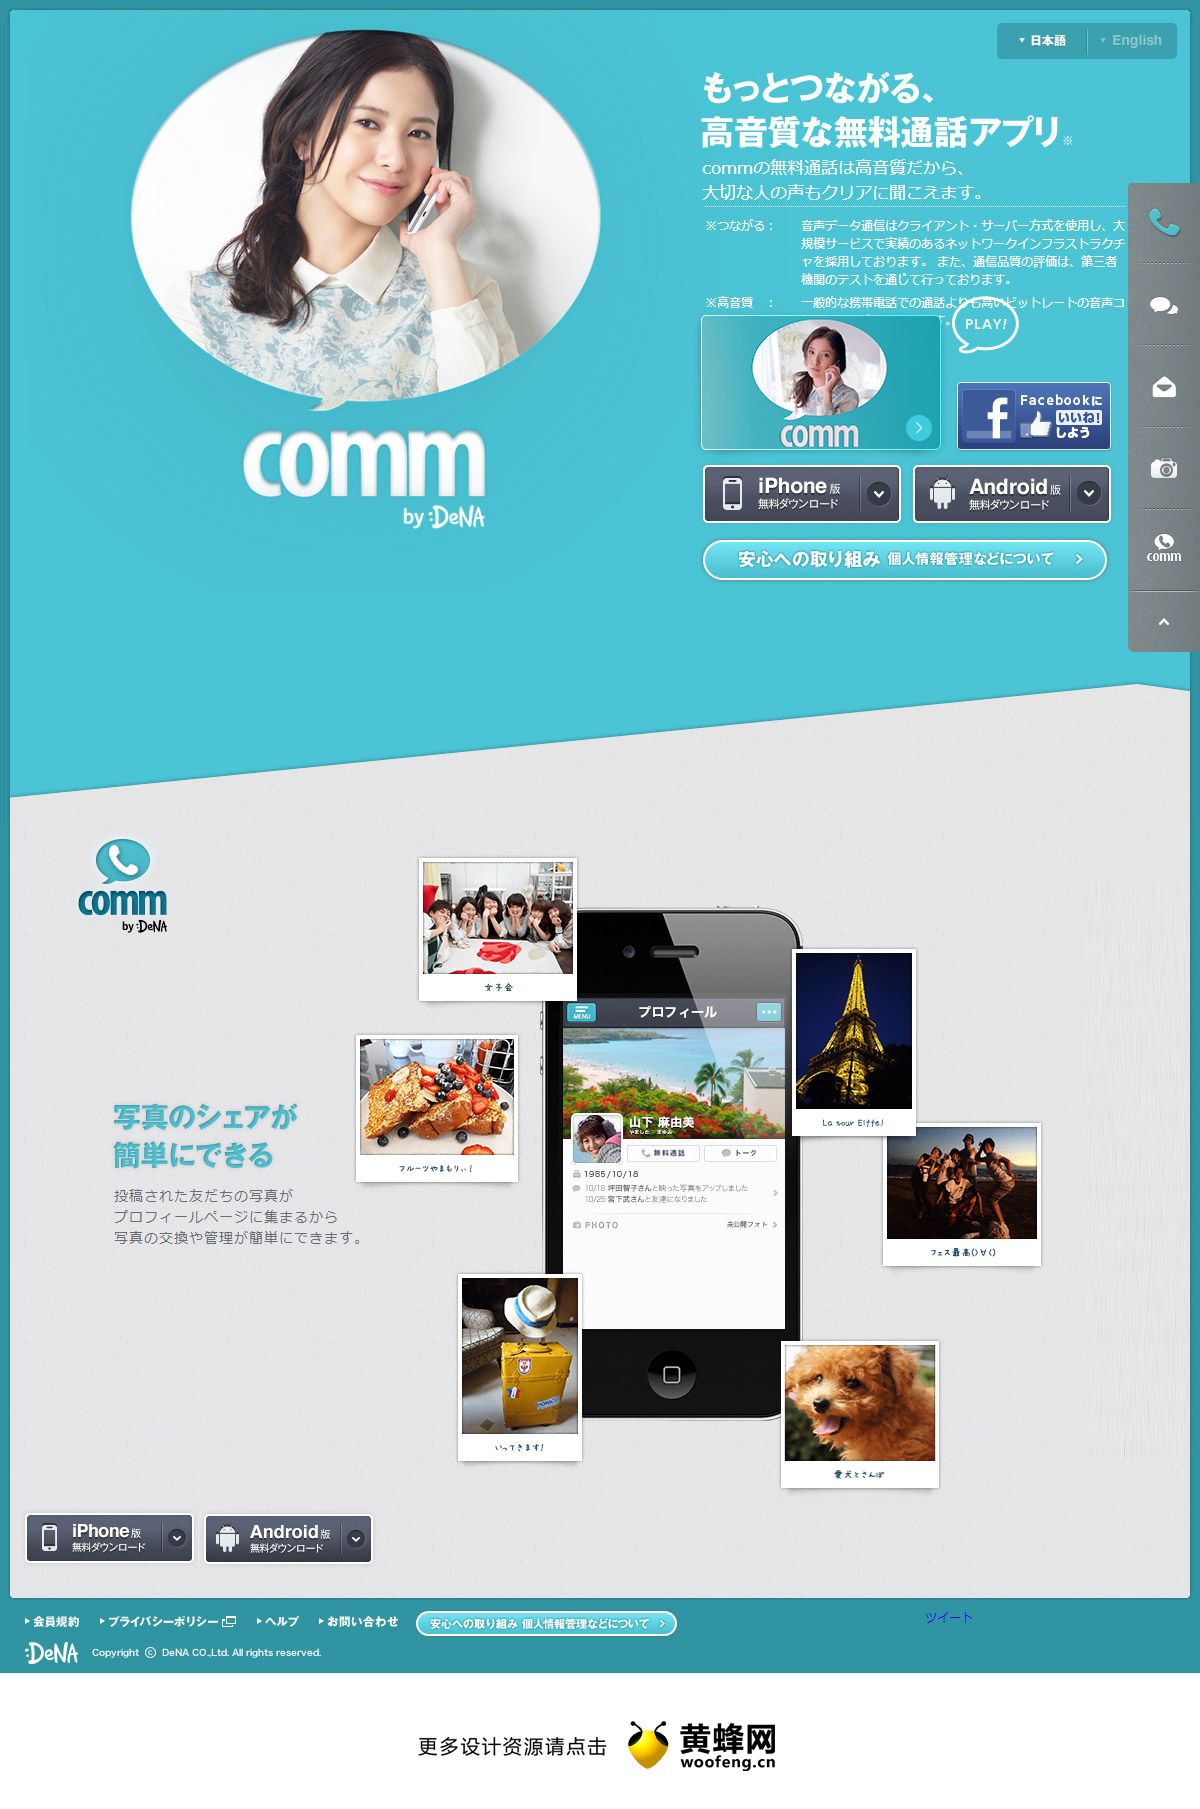 comm高品质的免费电话应用程序，来源自黄蜂网https://woofeng.cn/web/